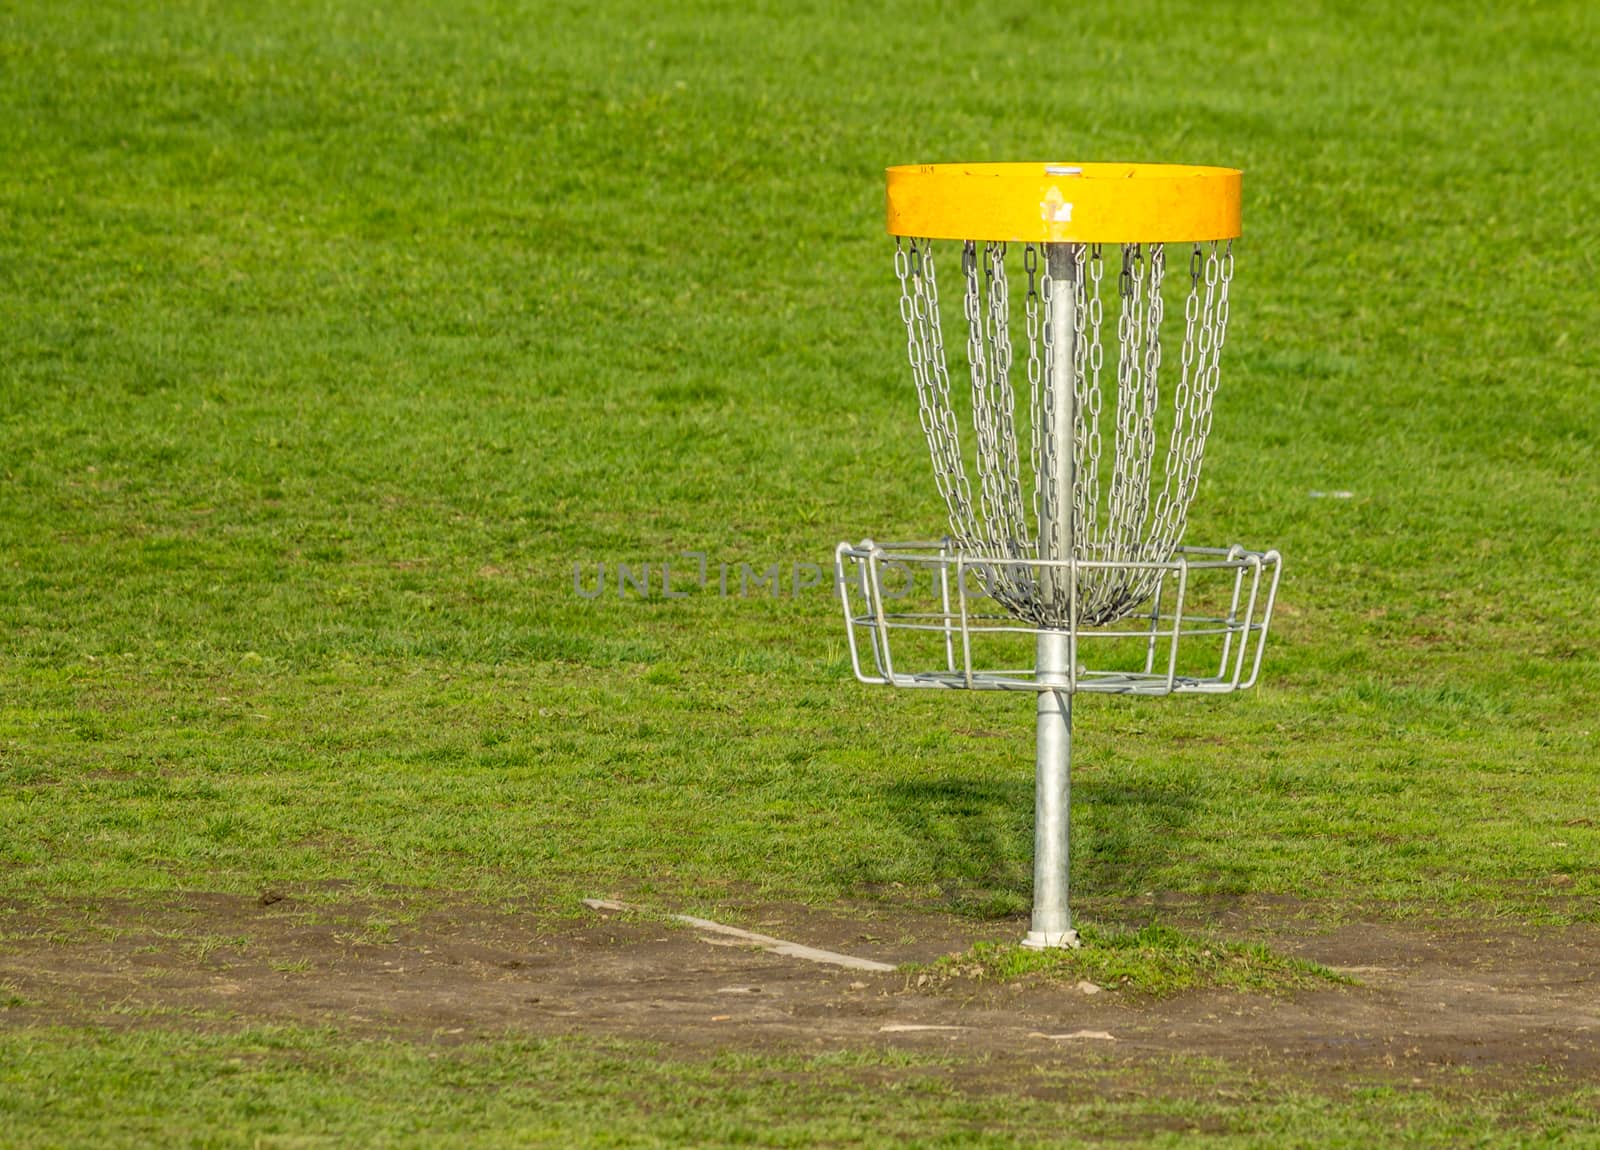 Frisbee golf basket on the green grass